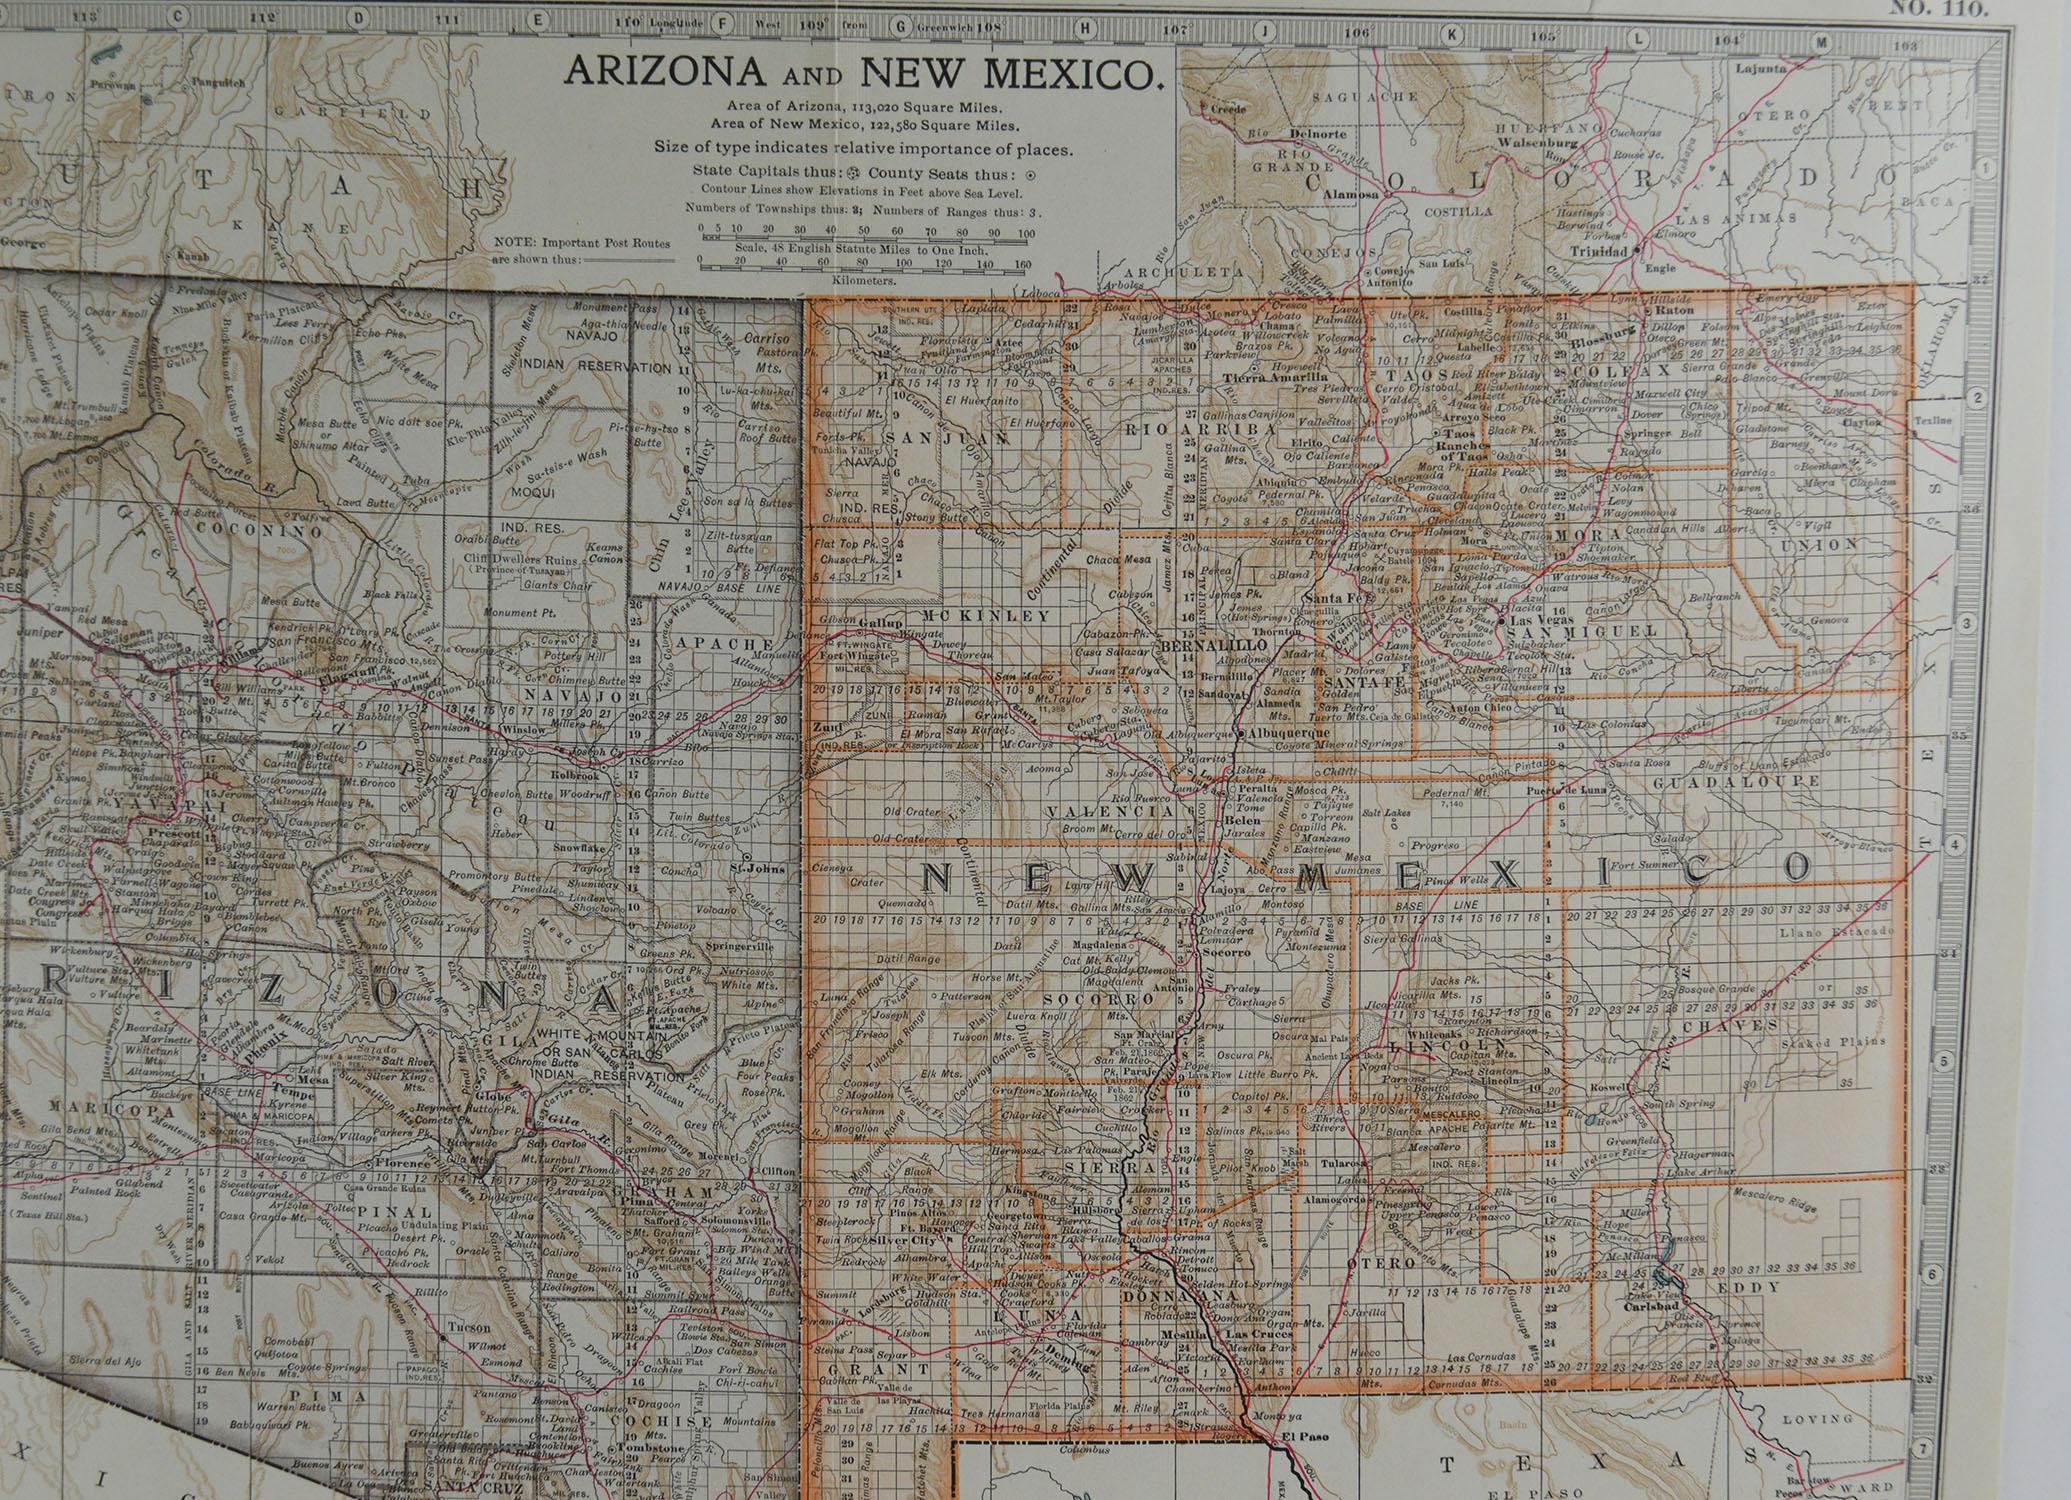 Other Original Antique Map of Arizona & New Mexico, circa 1890